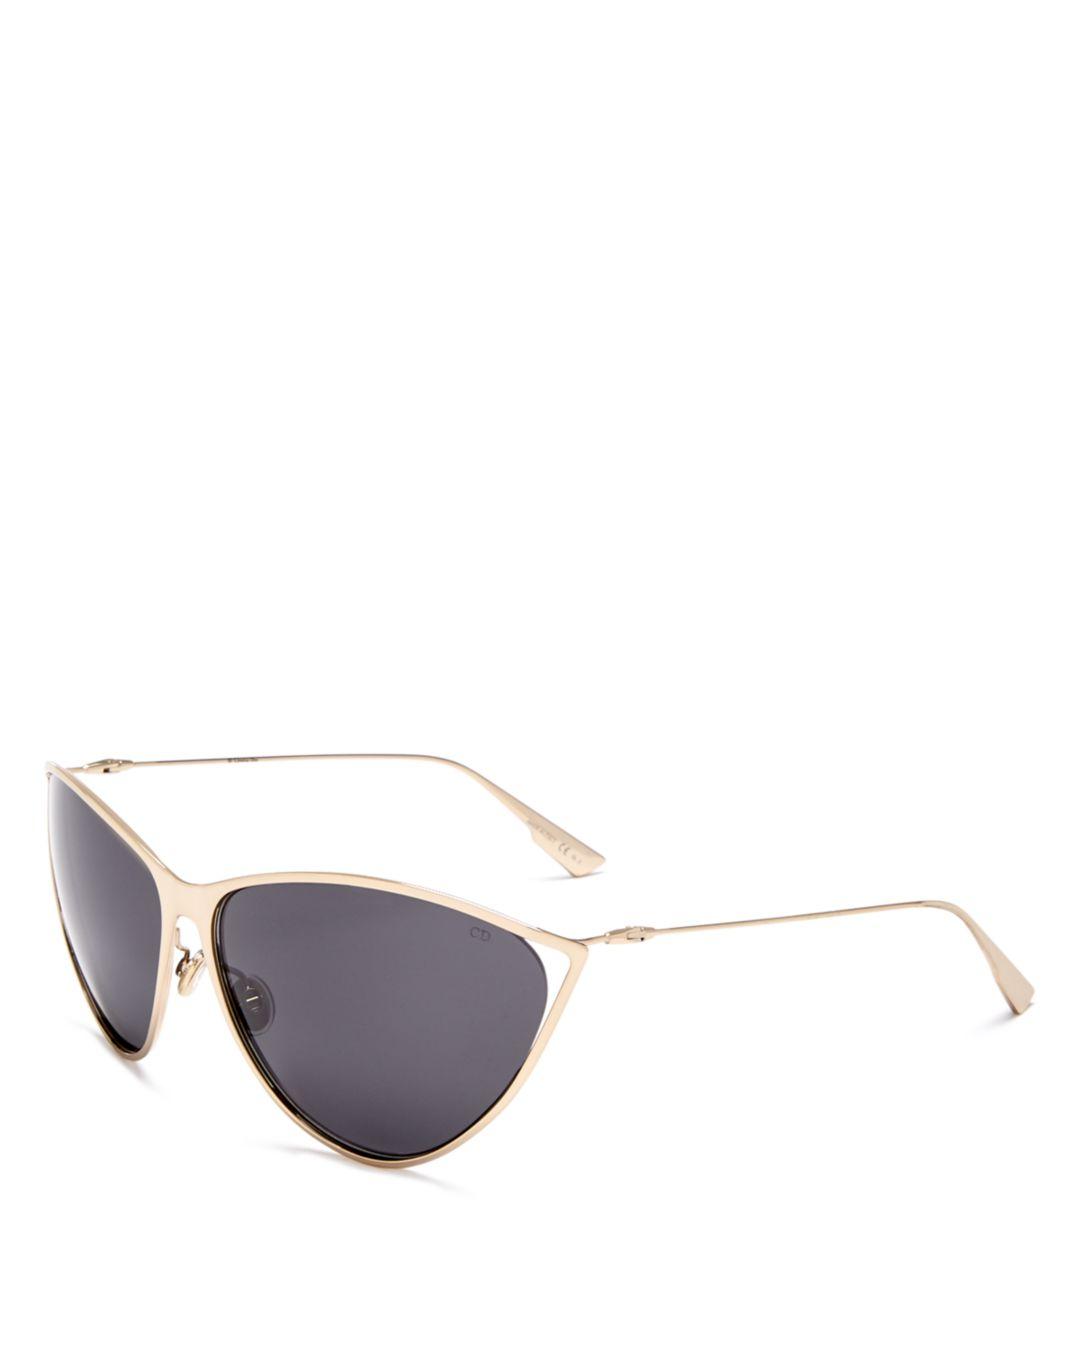 Dior Women's New Motard Cat Eye Sunglasses | Lyst